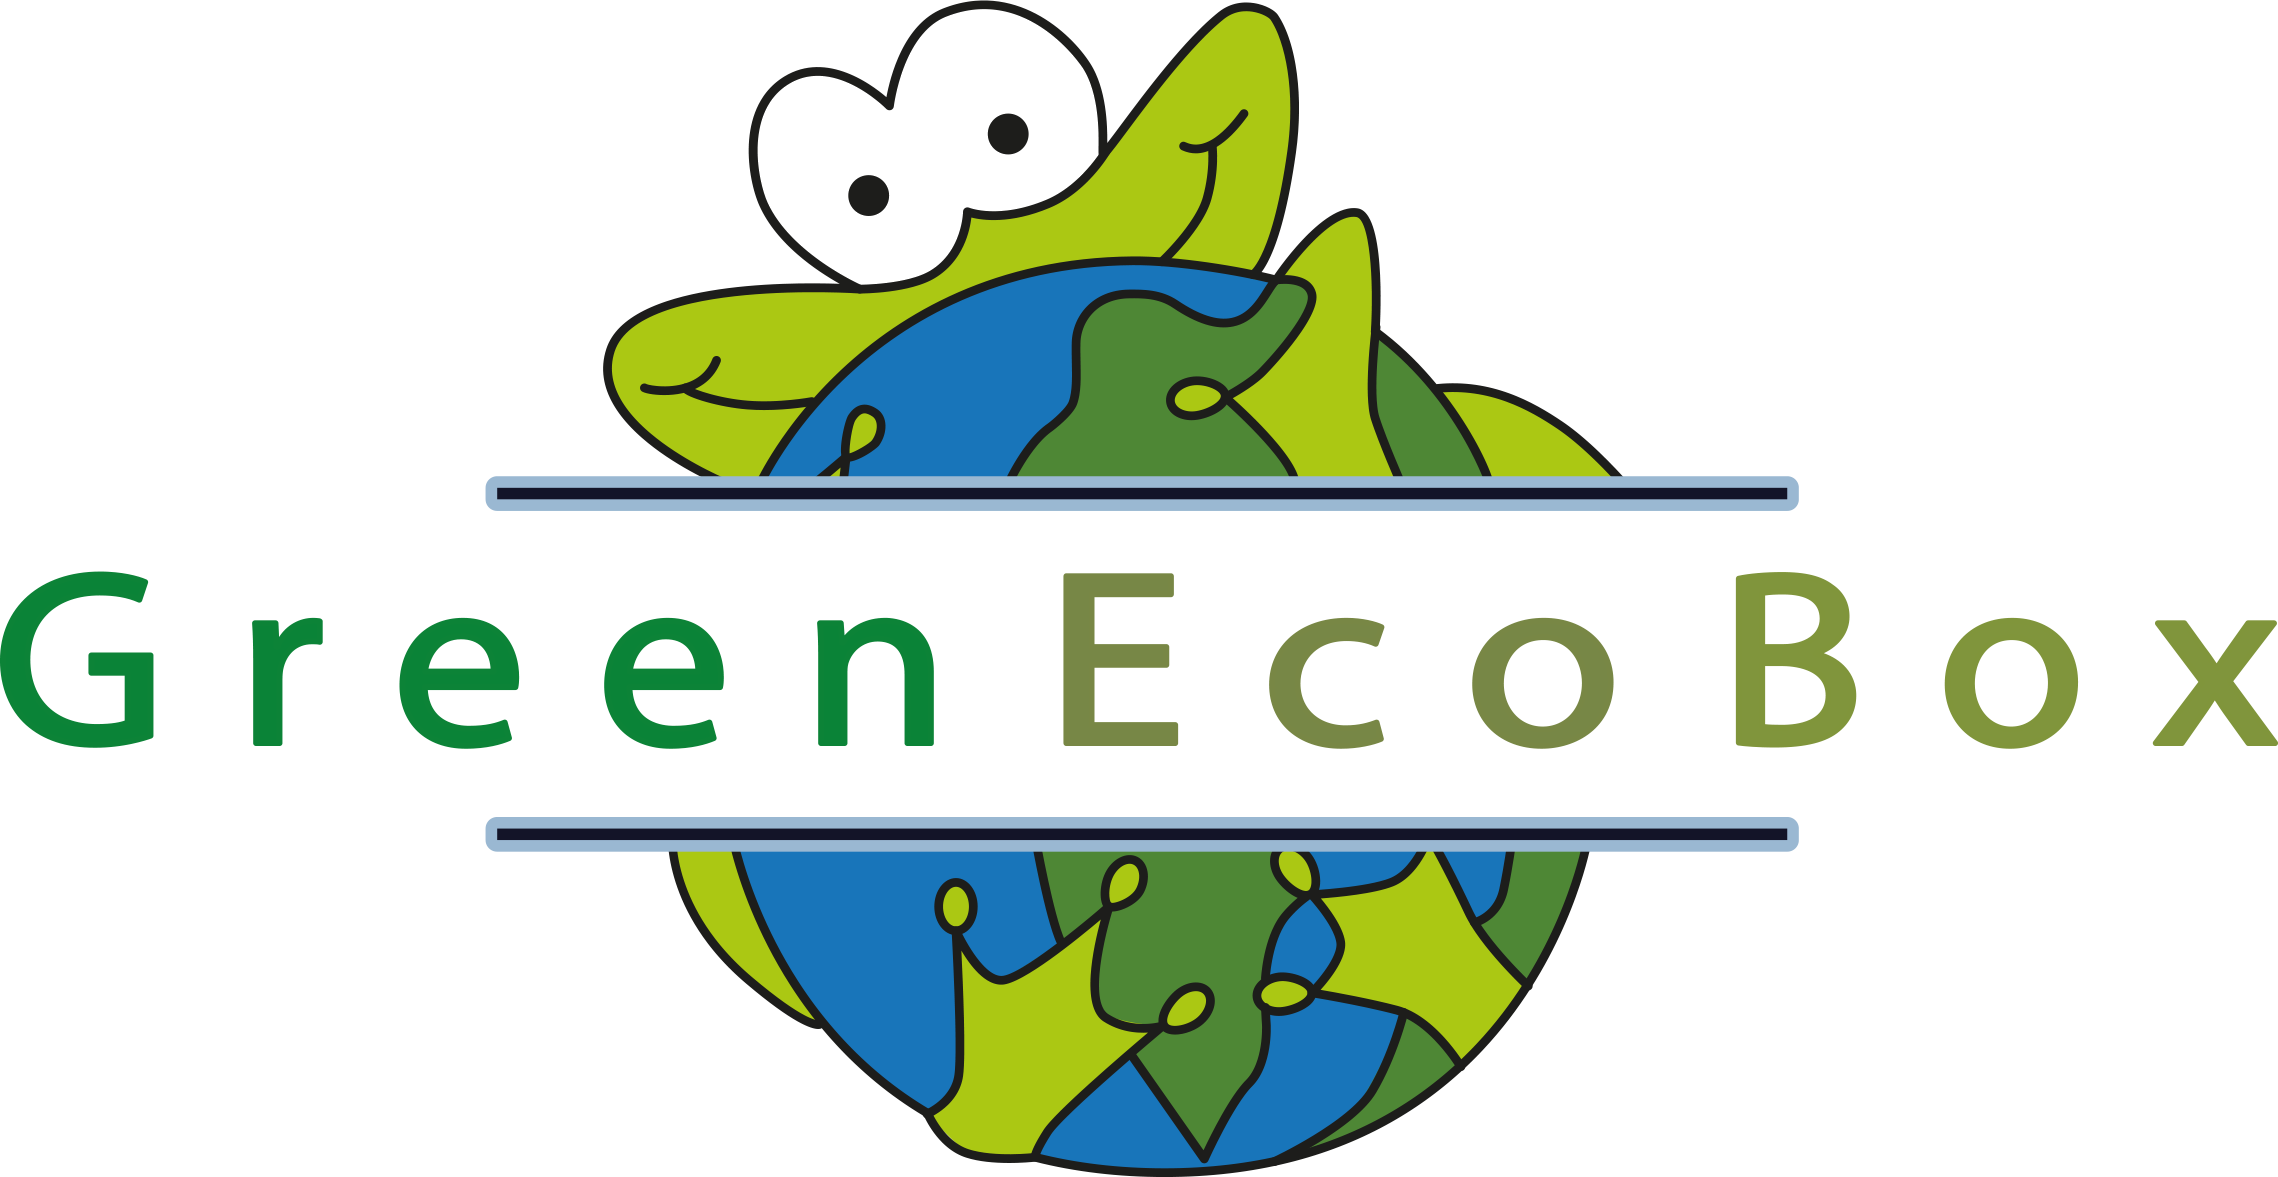 Greenecobox - Green Eco Box (2278x1177)